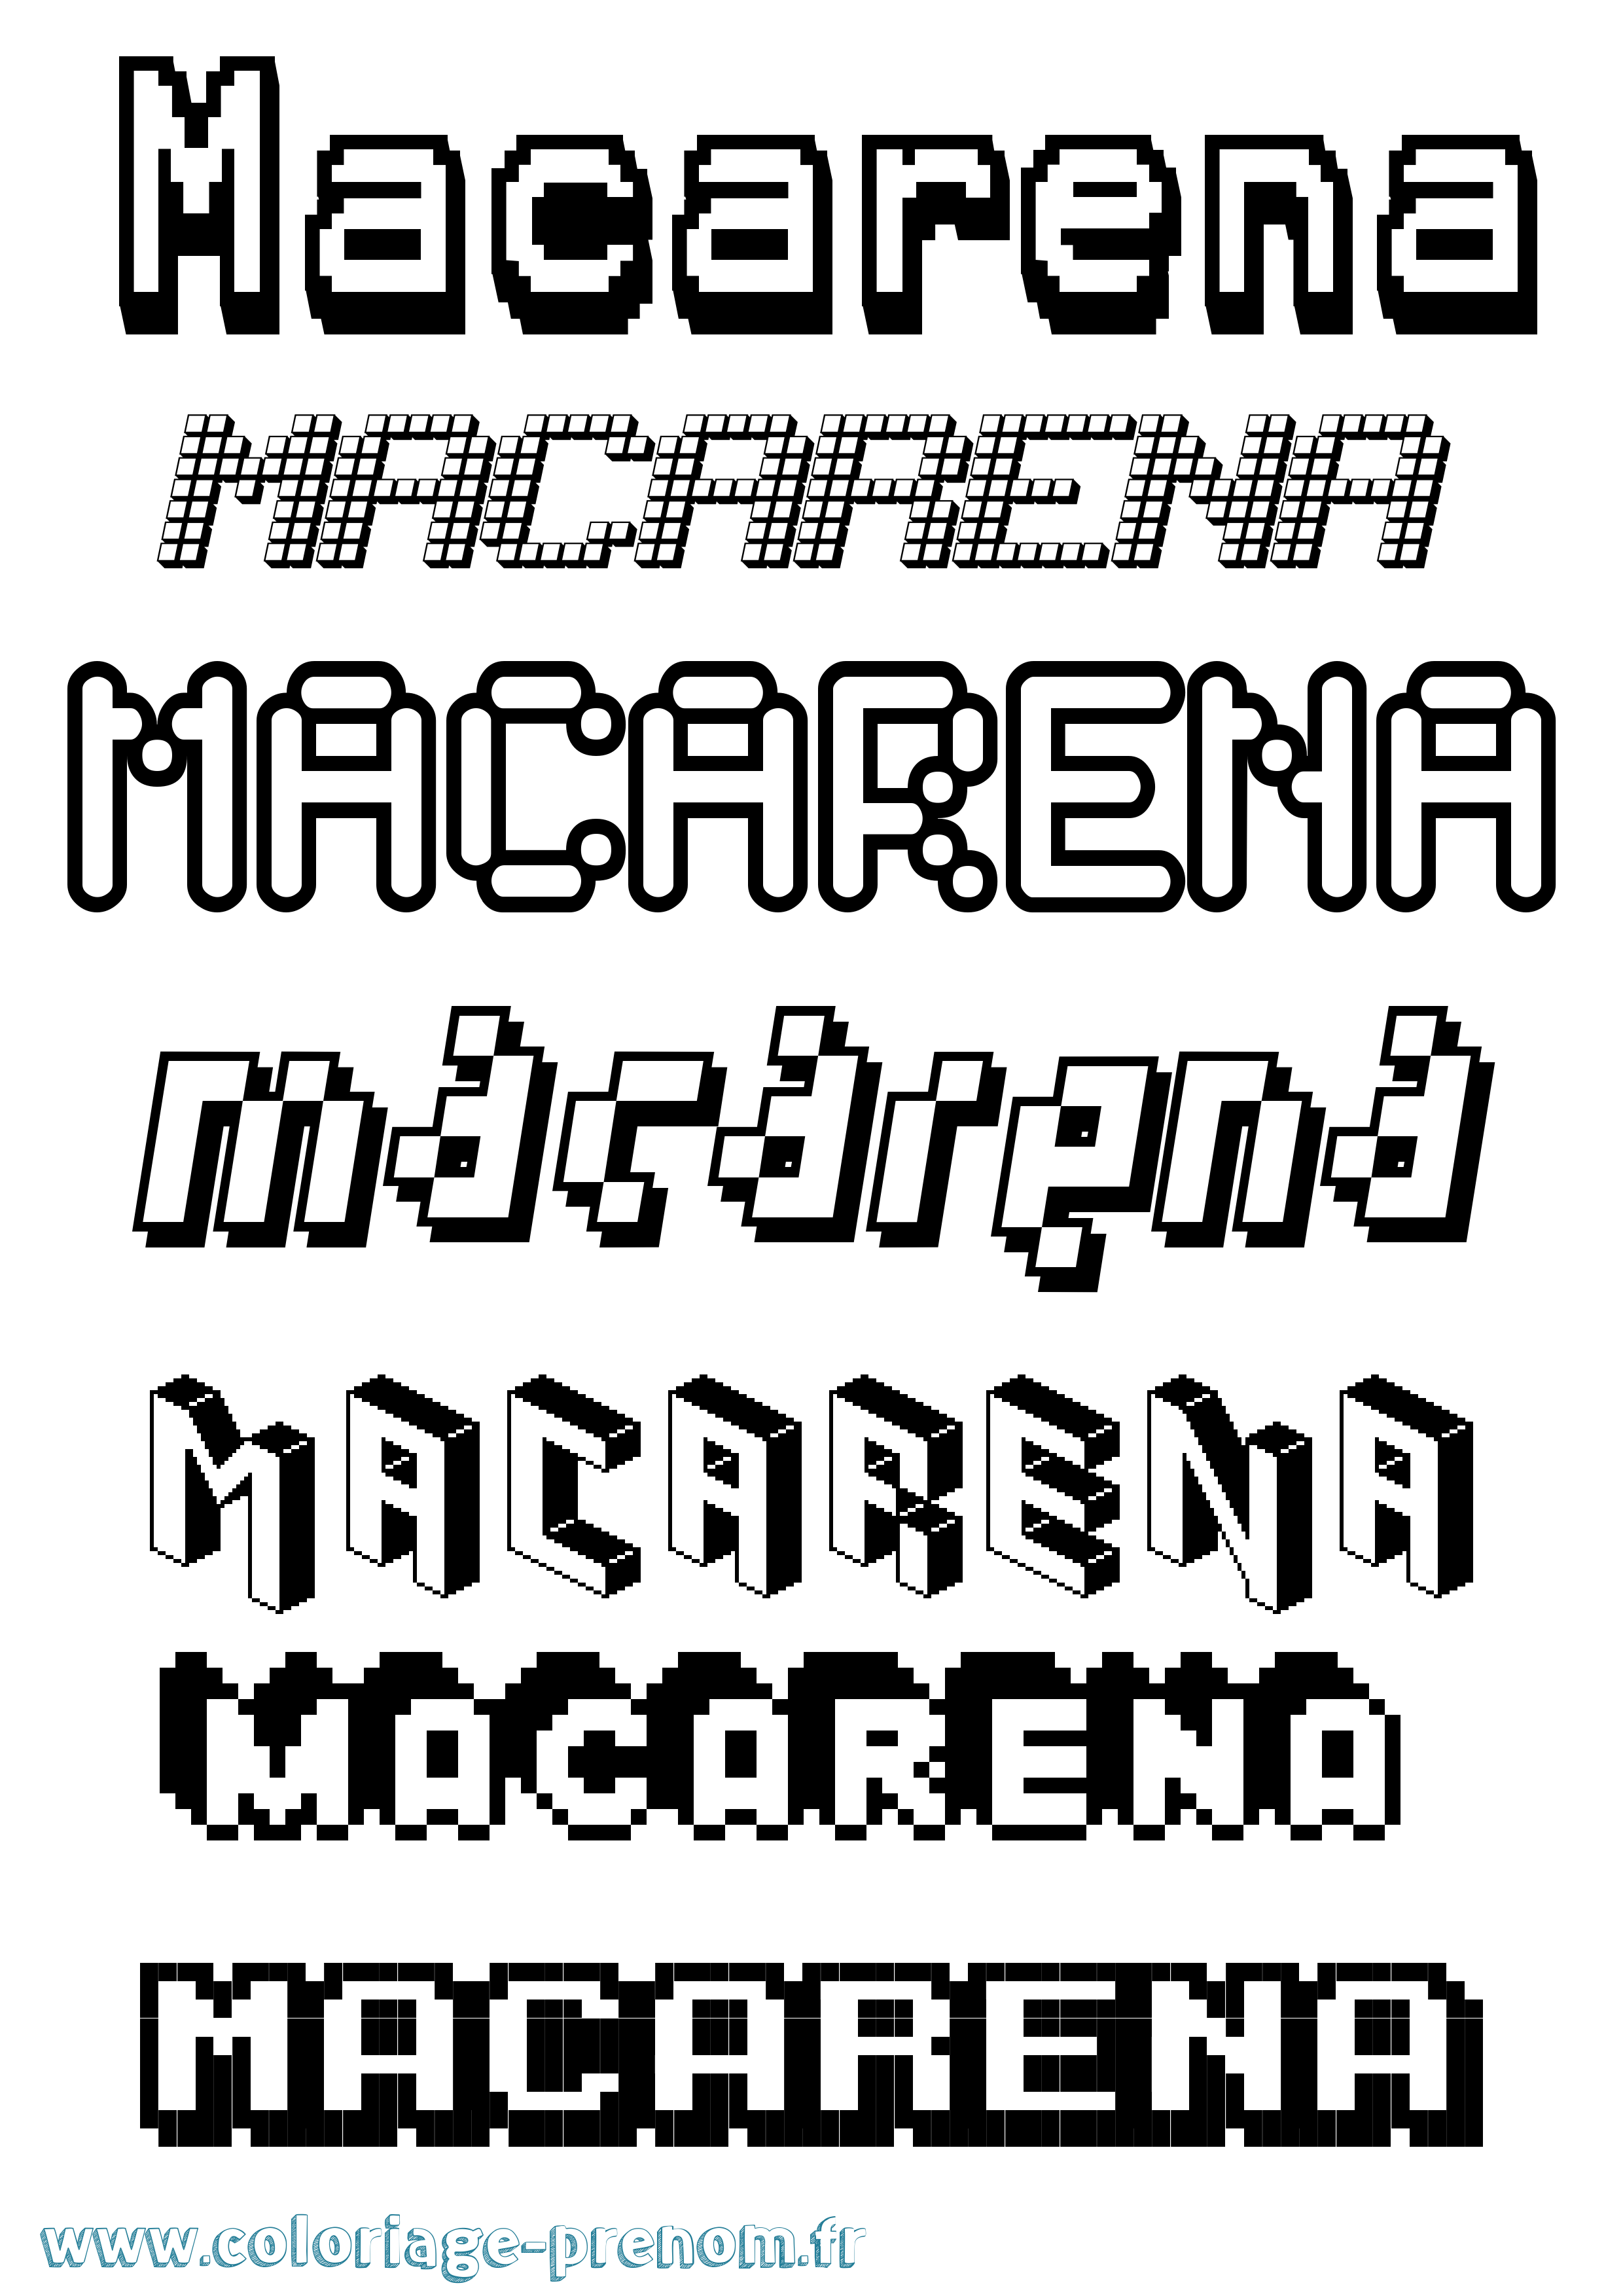 Coloriage prénom Macarena Pixel